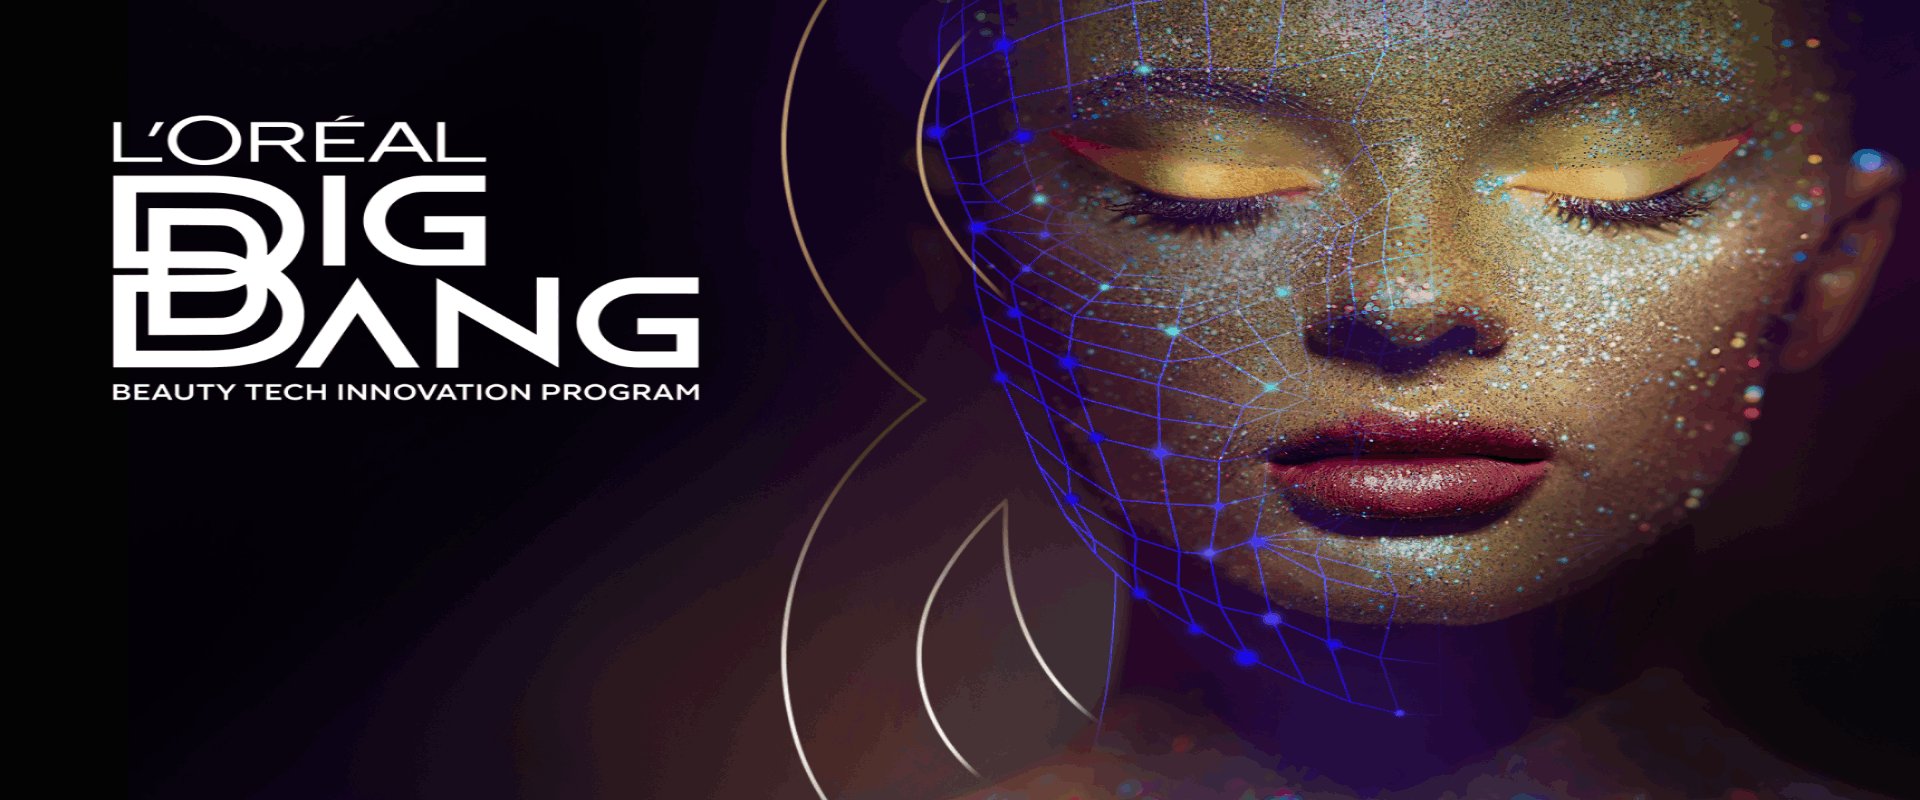 LOreal SAPMENA Big Bang Beauty Tech Innovation Program visual  release1 latest